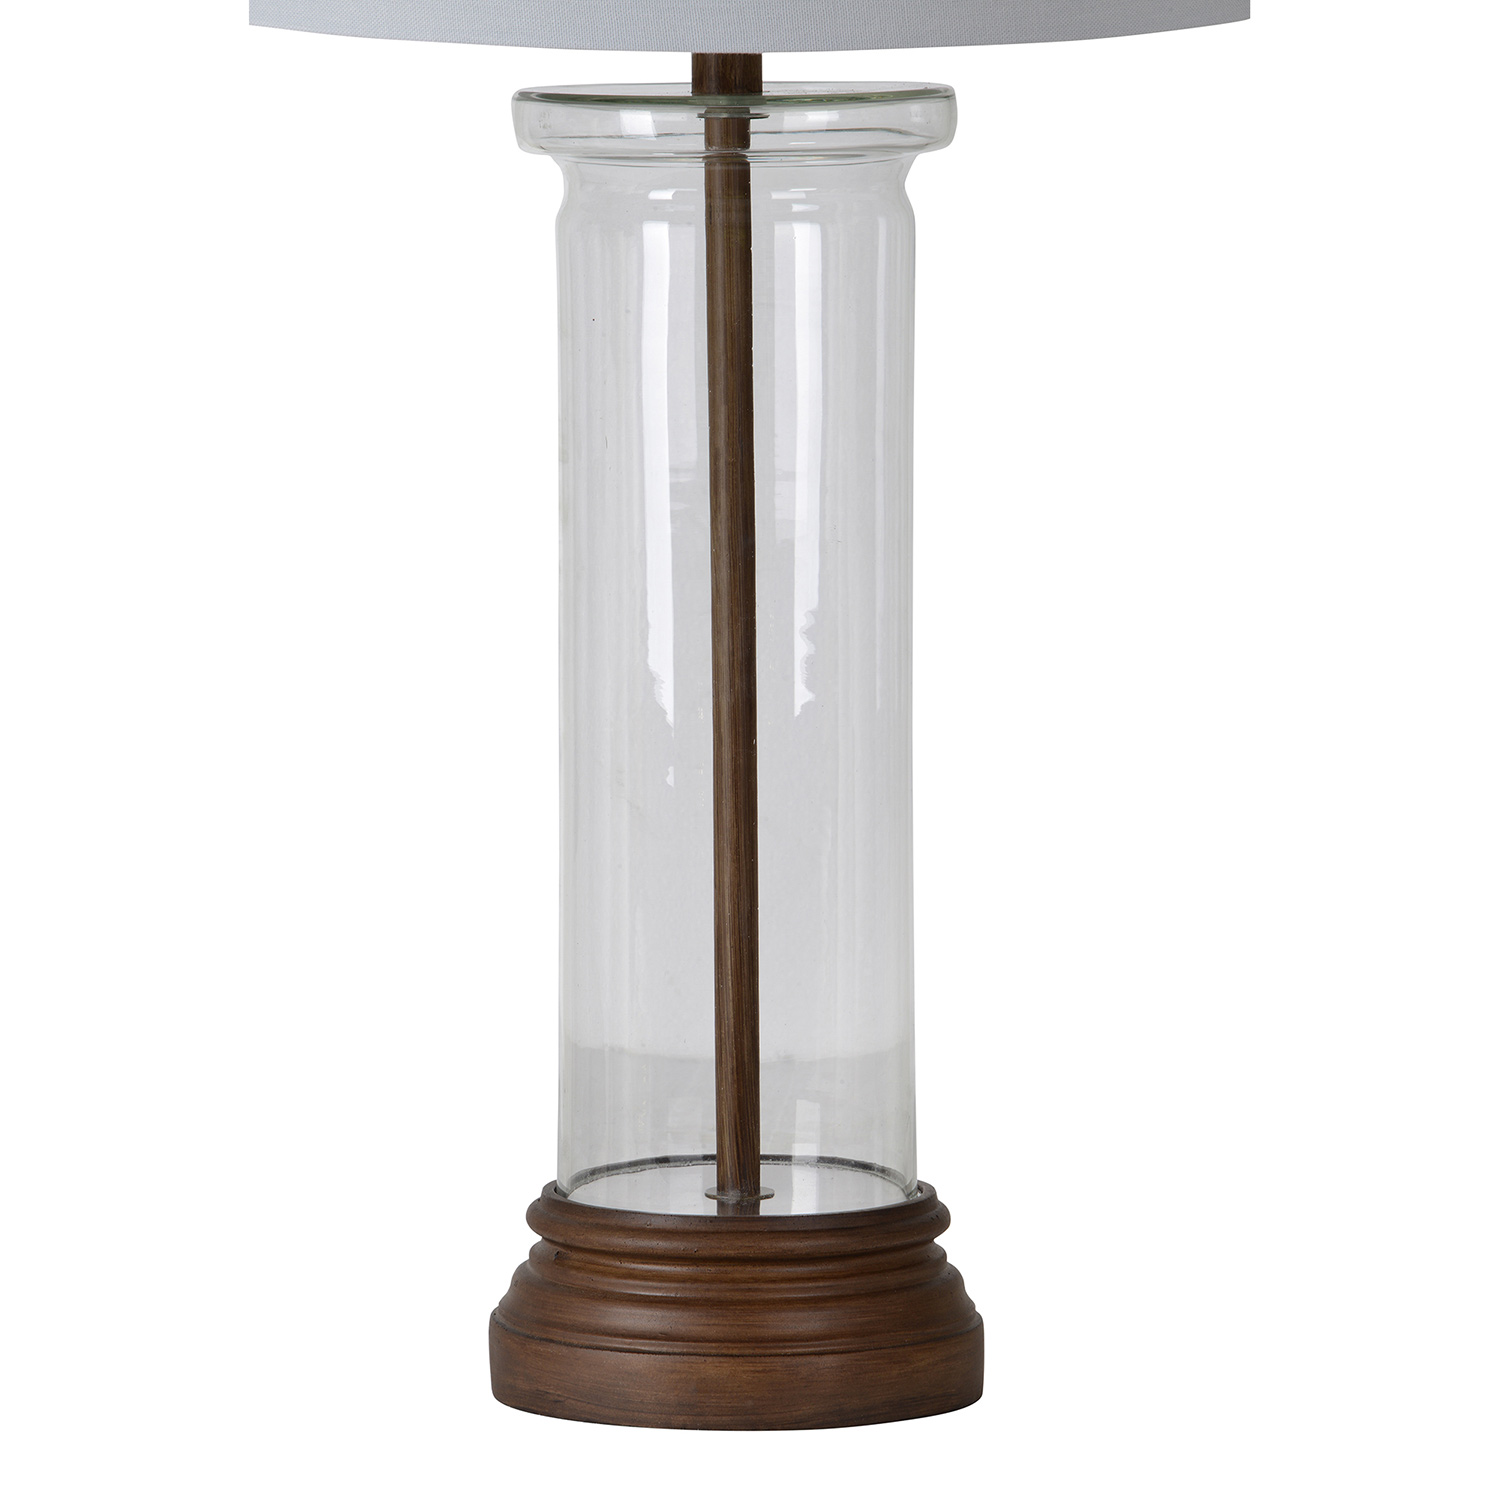 Ren-Wil Summerby Table Lamp - Wood Grain